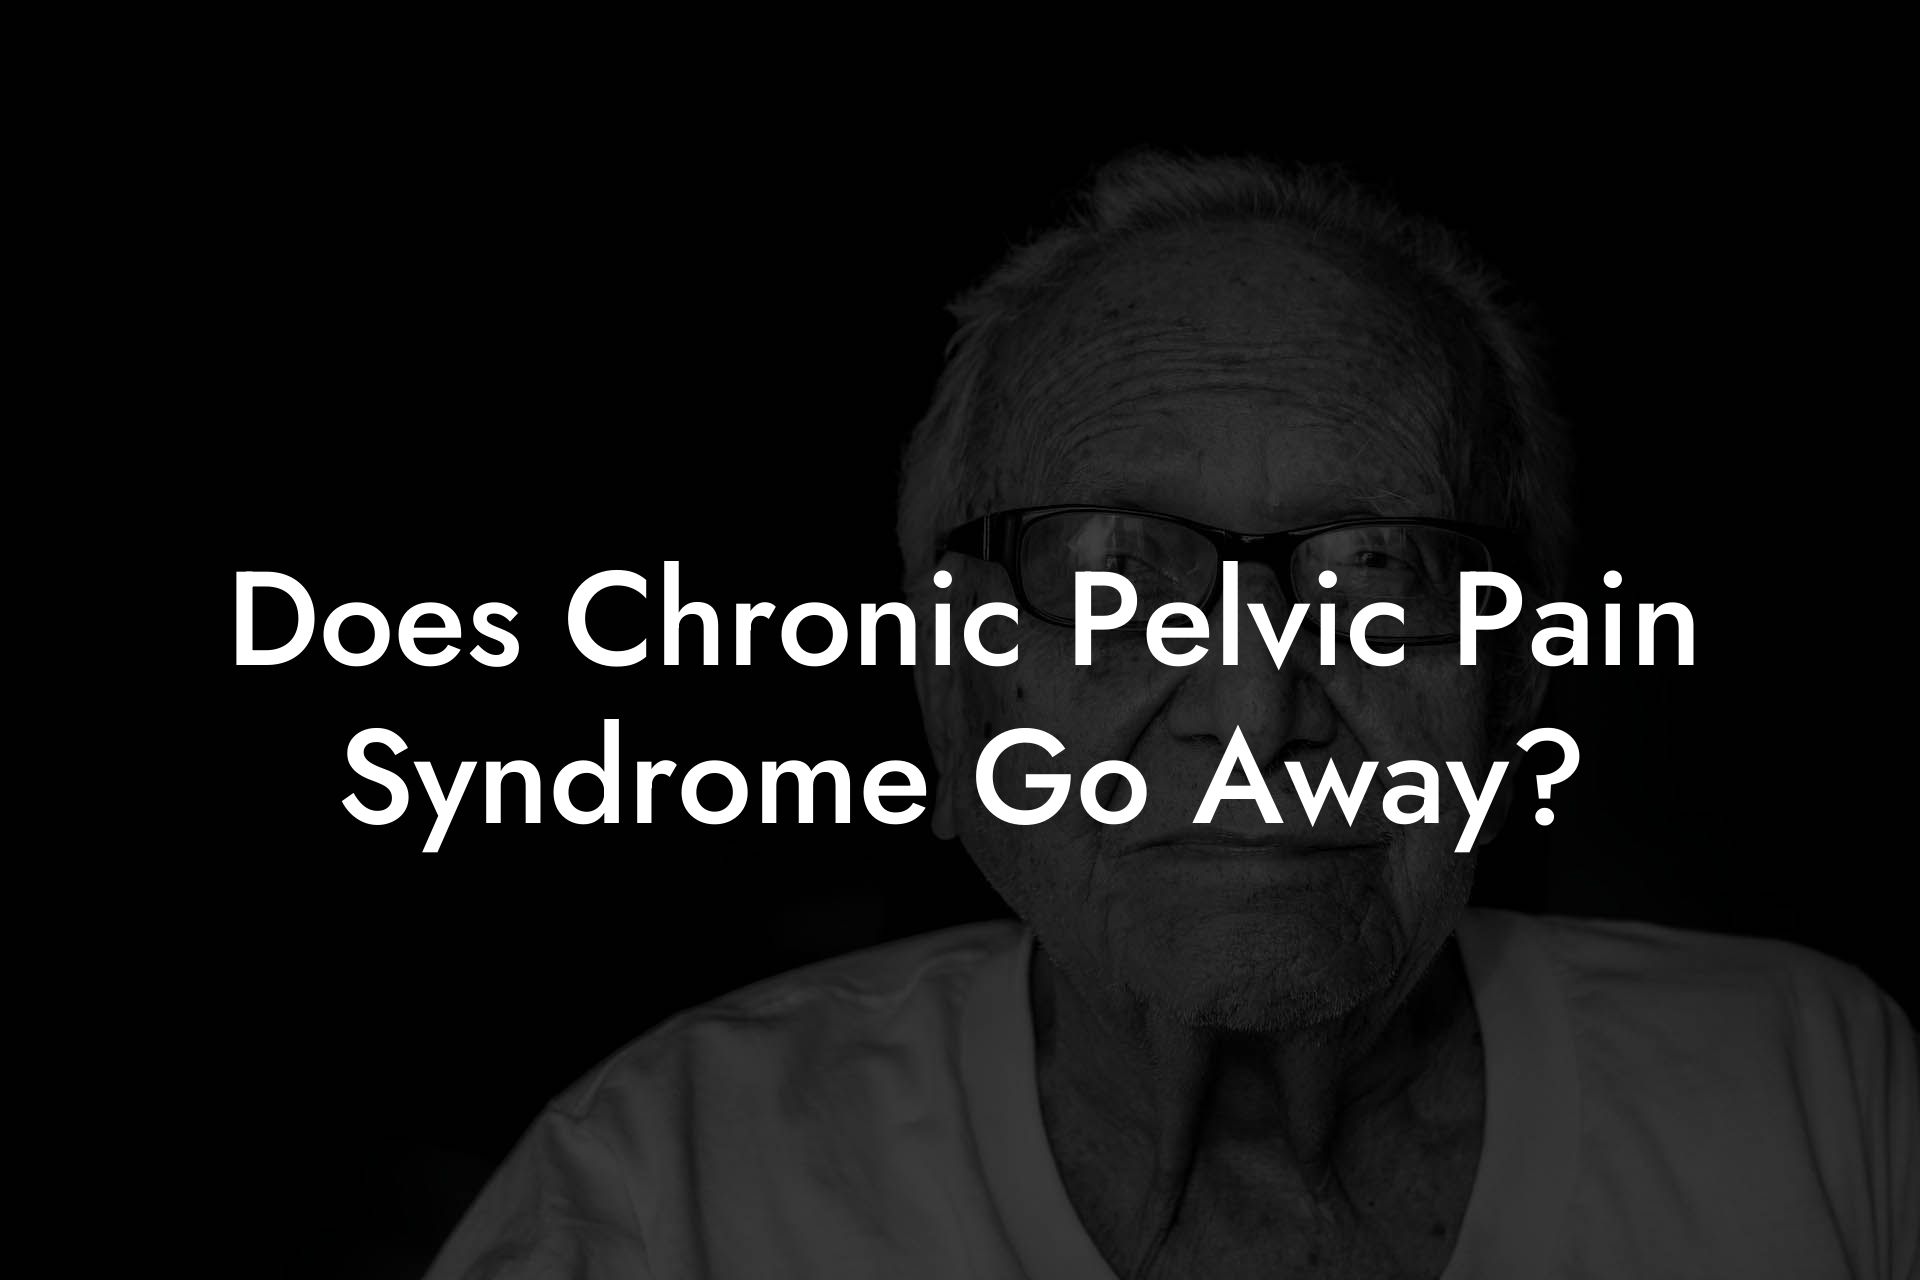 Does Chronic Pelvic Pain Syndrome Go Away?